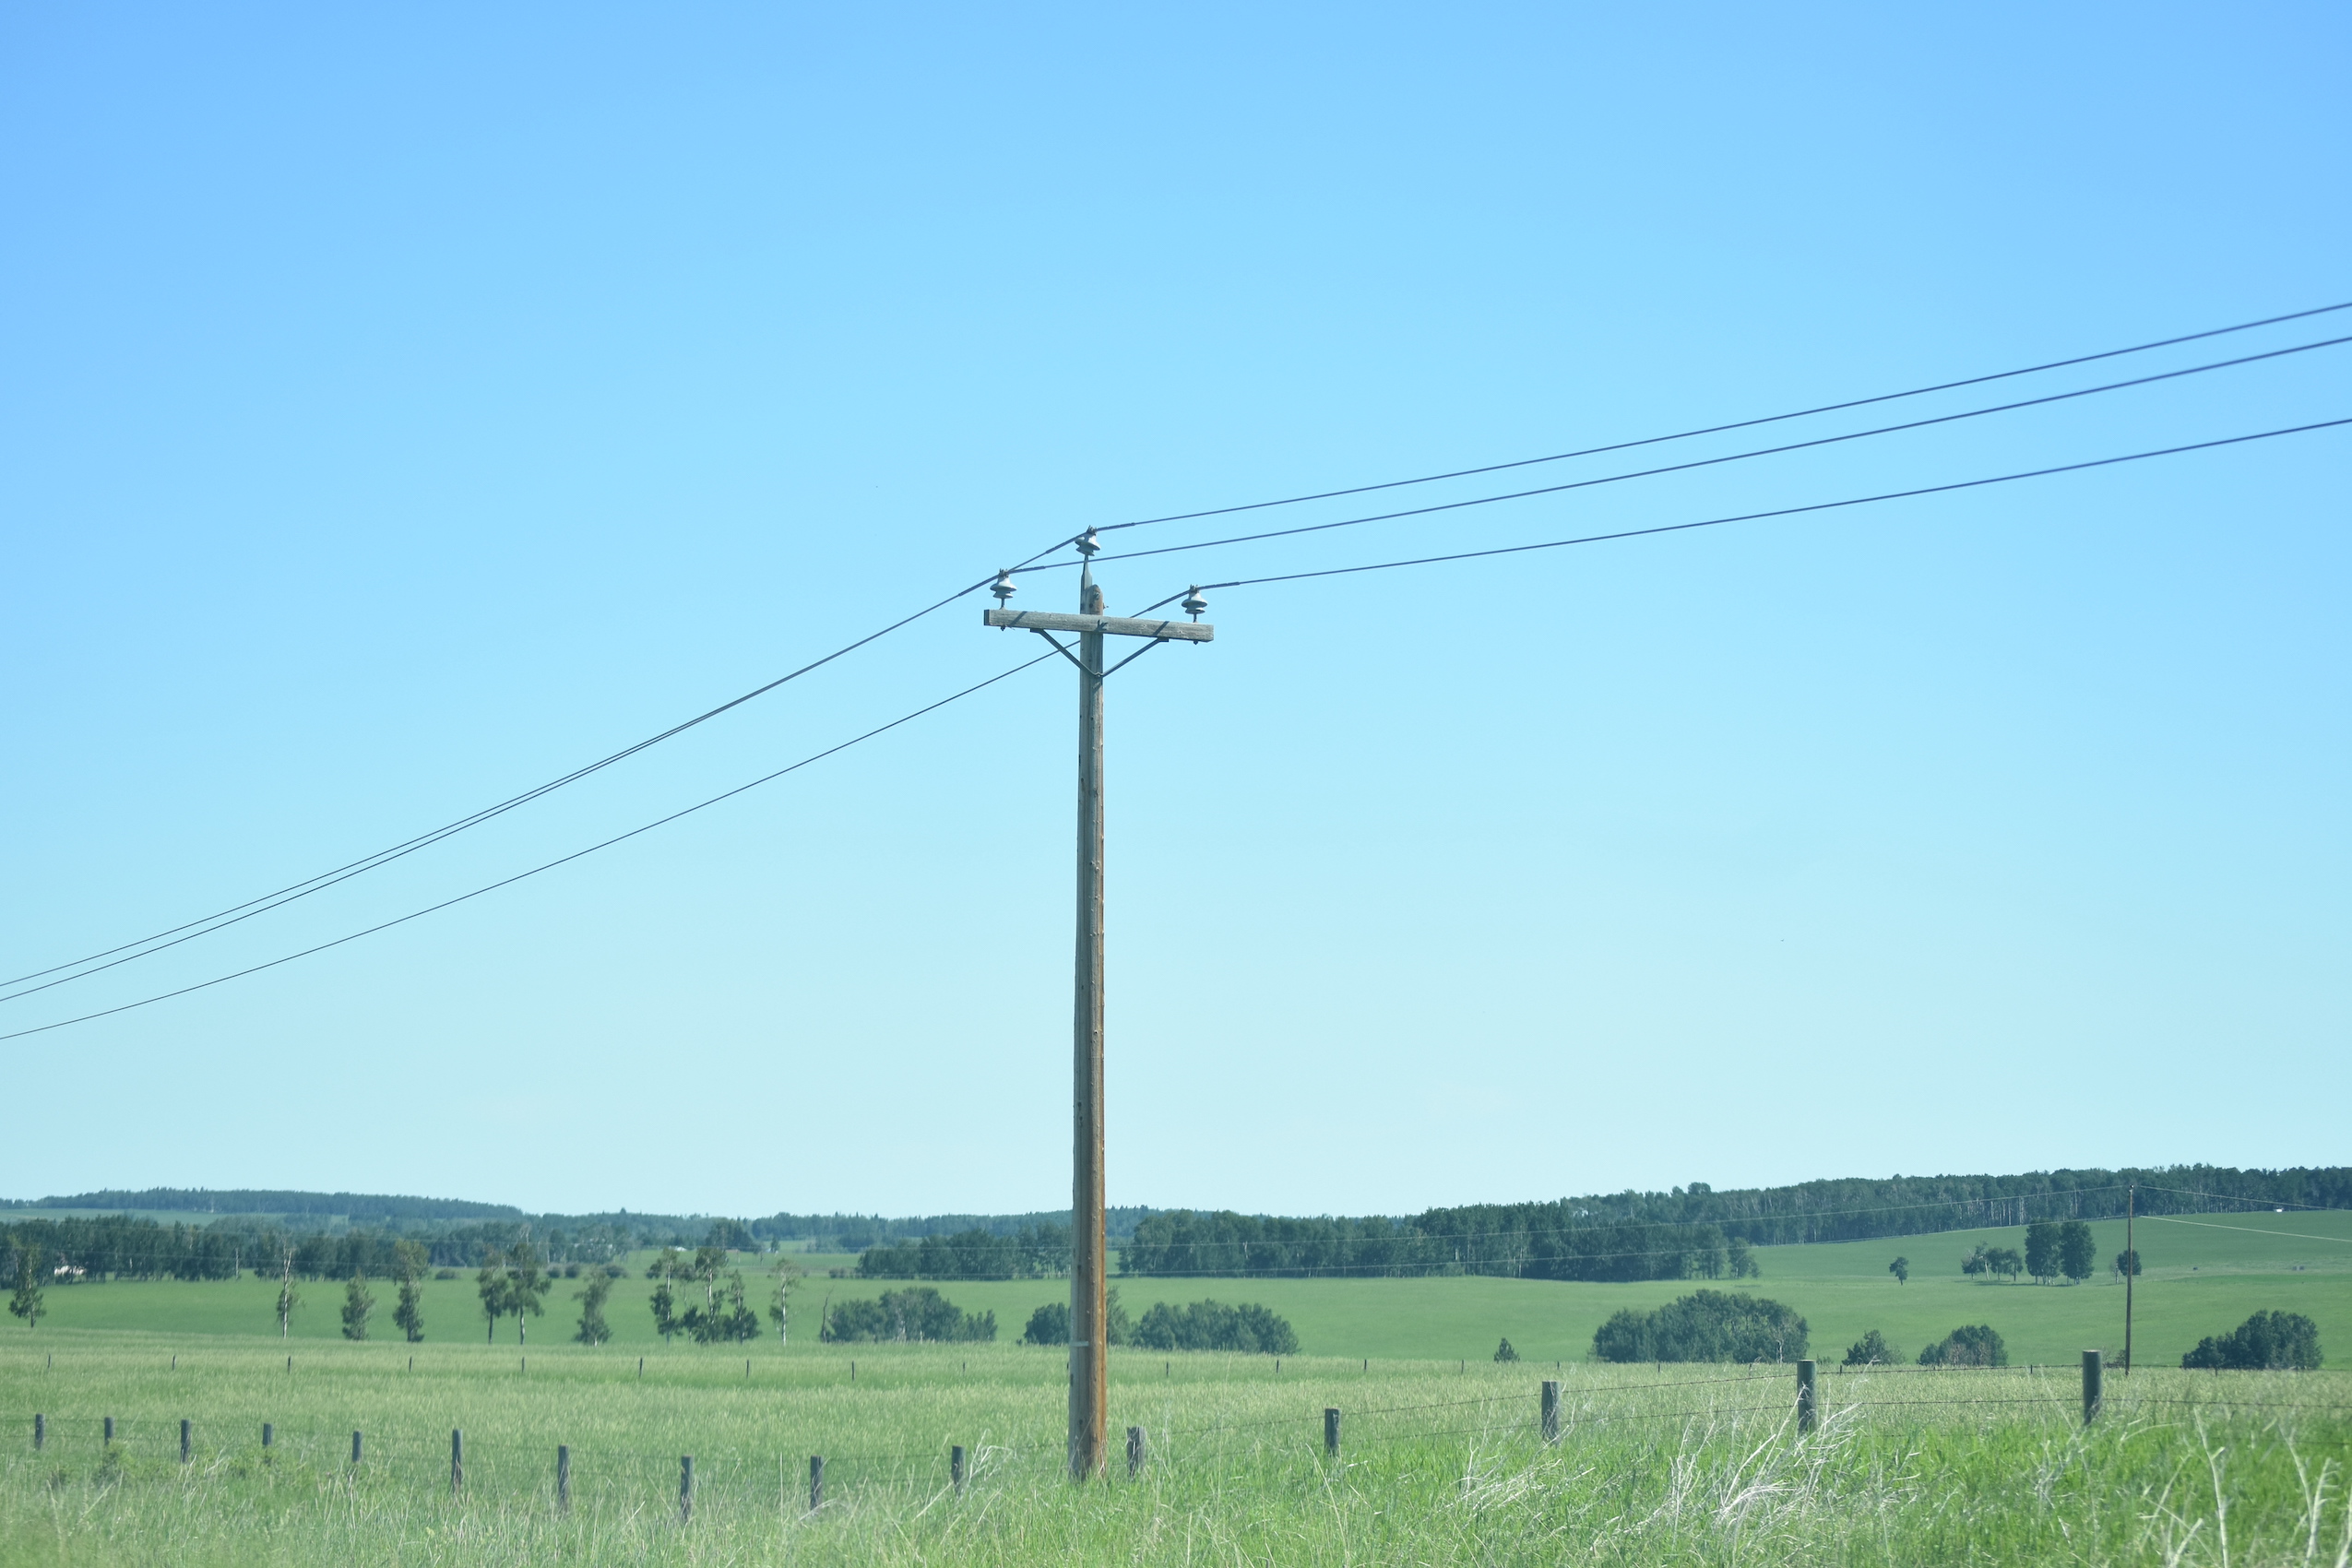 Alberta power lines in a prairie field before a clear blue sky